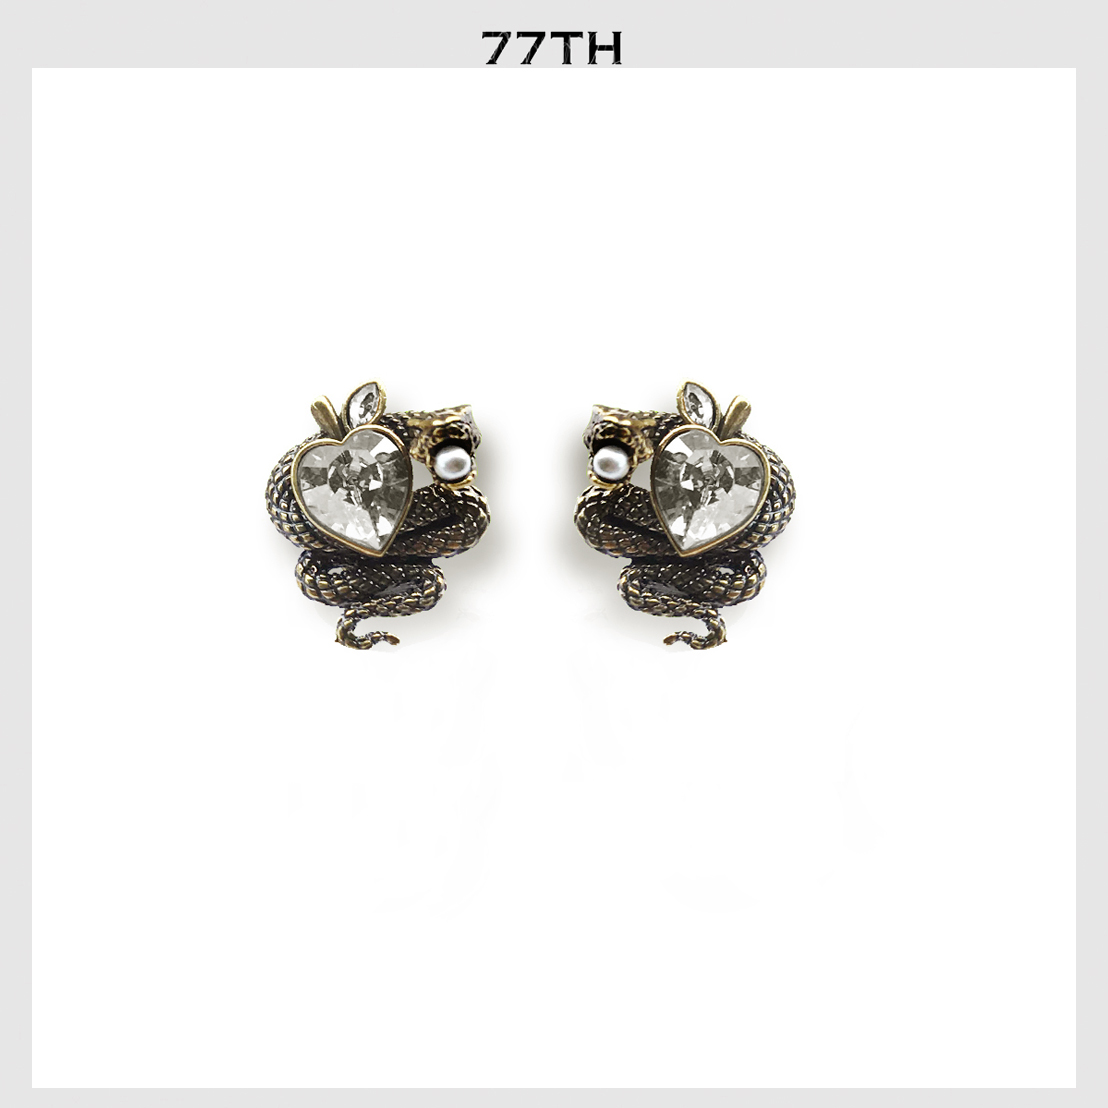 77th-sririta x 77th crystals from Swarovski collection serpent earrings smoke  crystals gold ต่างหู ศรีริต้า x 77th คริสตัลสวรอฟสกี้ สีทอง